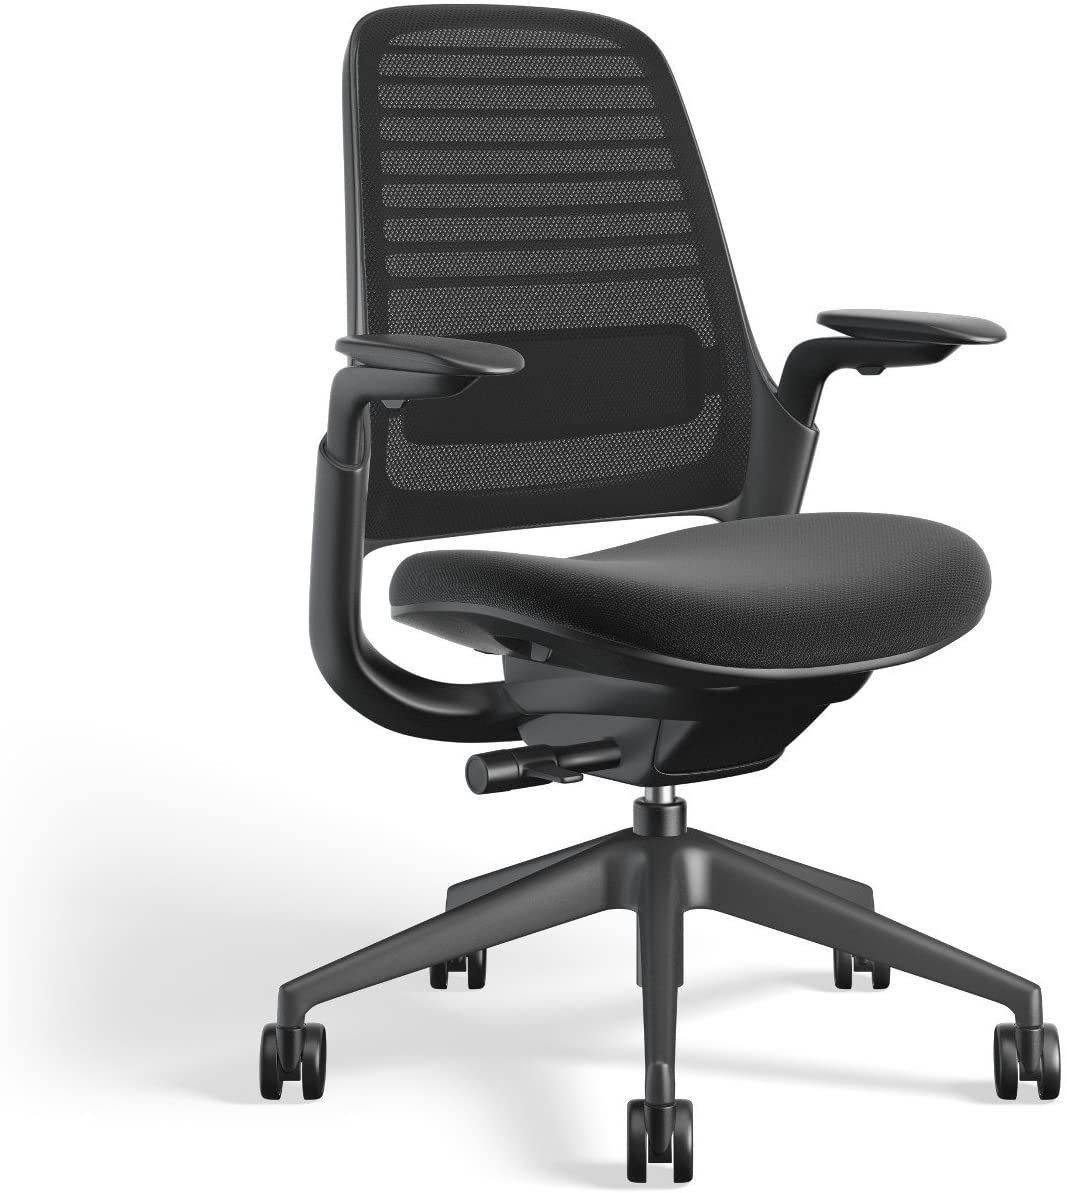 Steelcase Series 1 Office Chair vs Steelcase Amia Ergonomic Office